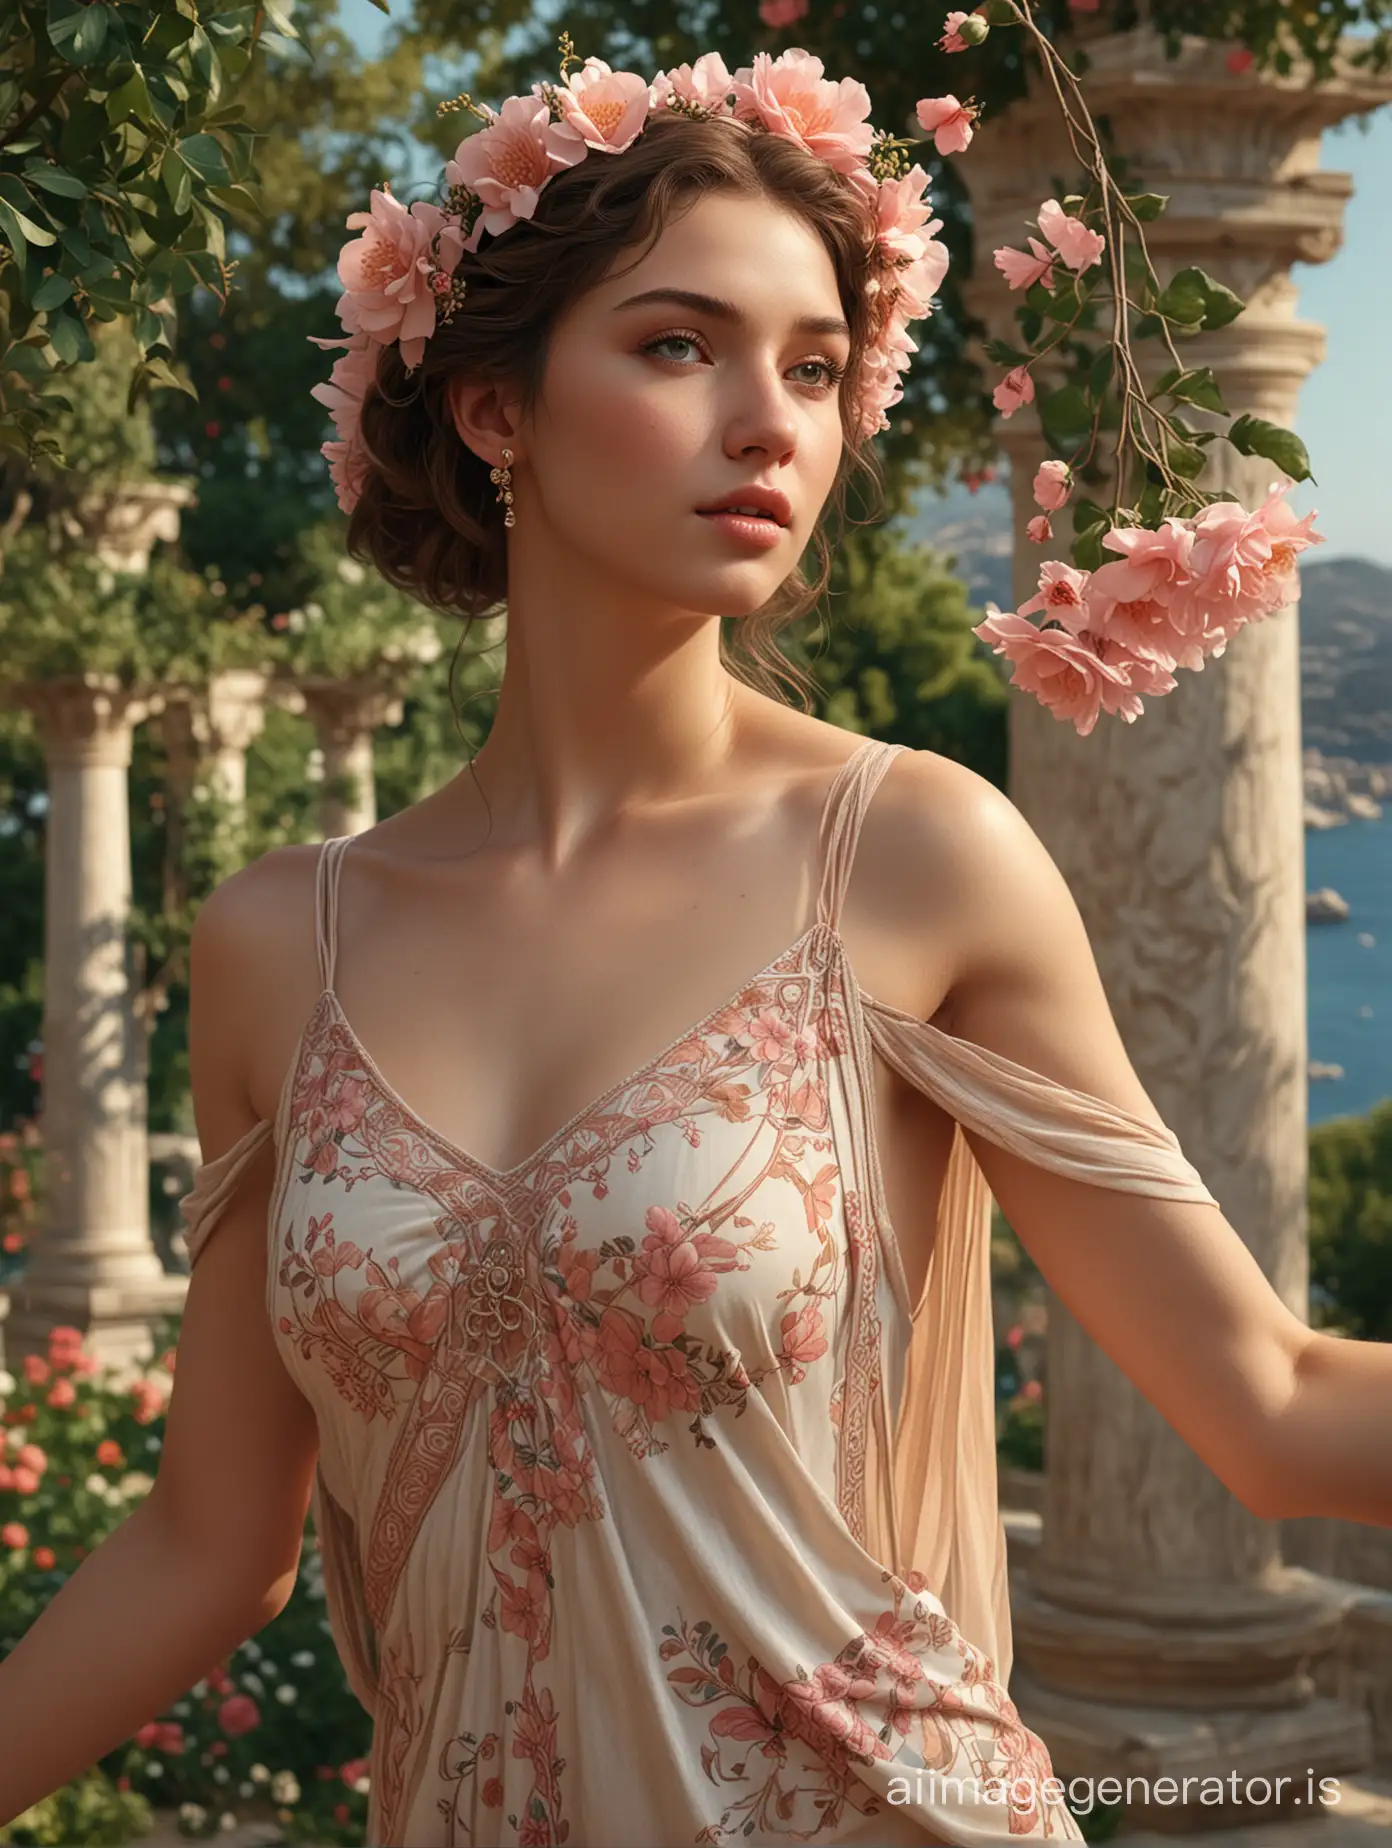 Ancient-Greek-Garden-Dancer-with-Opulent-Flowers